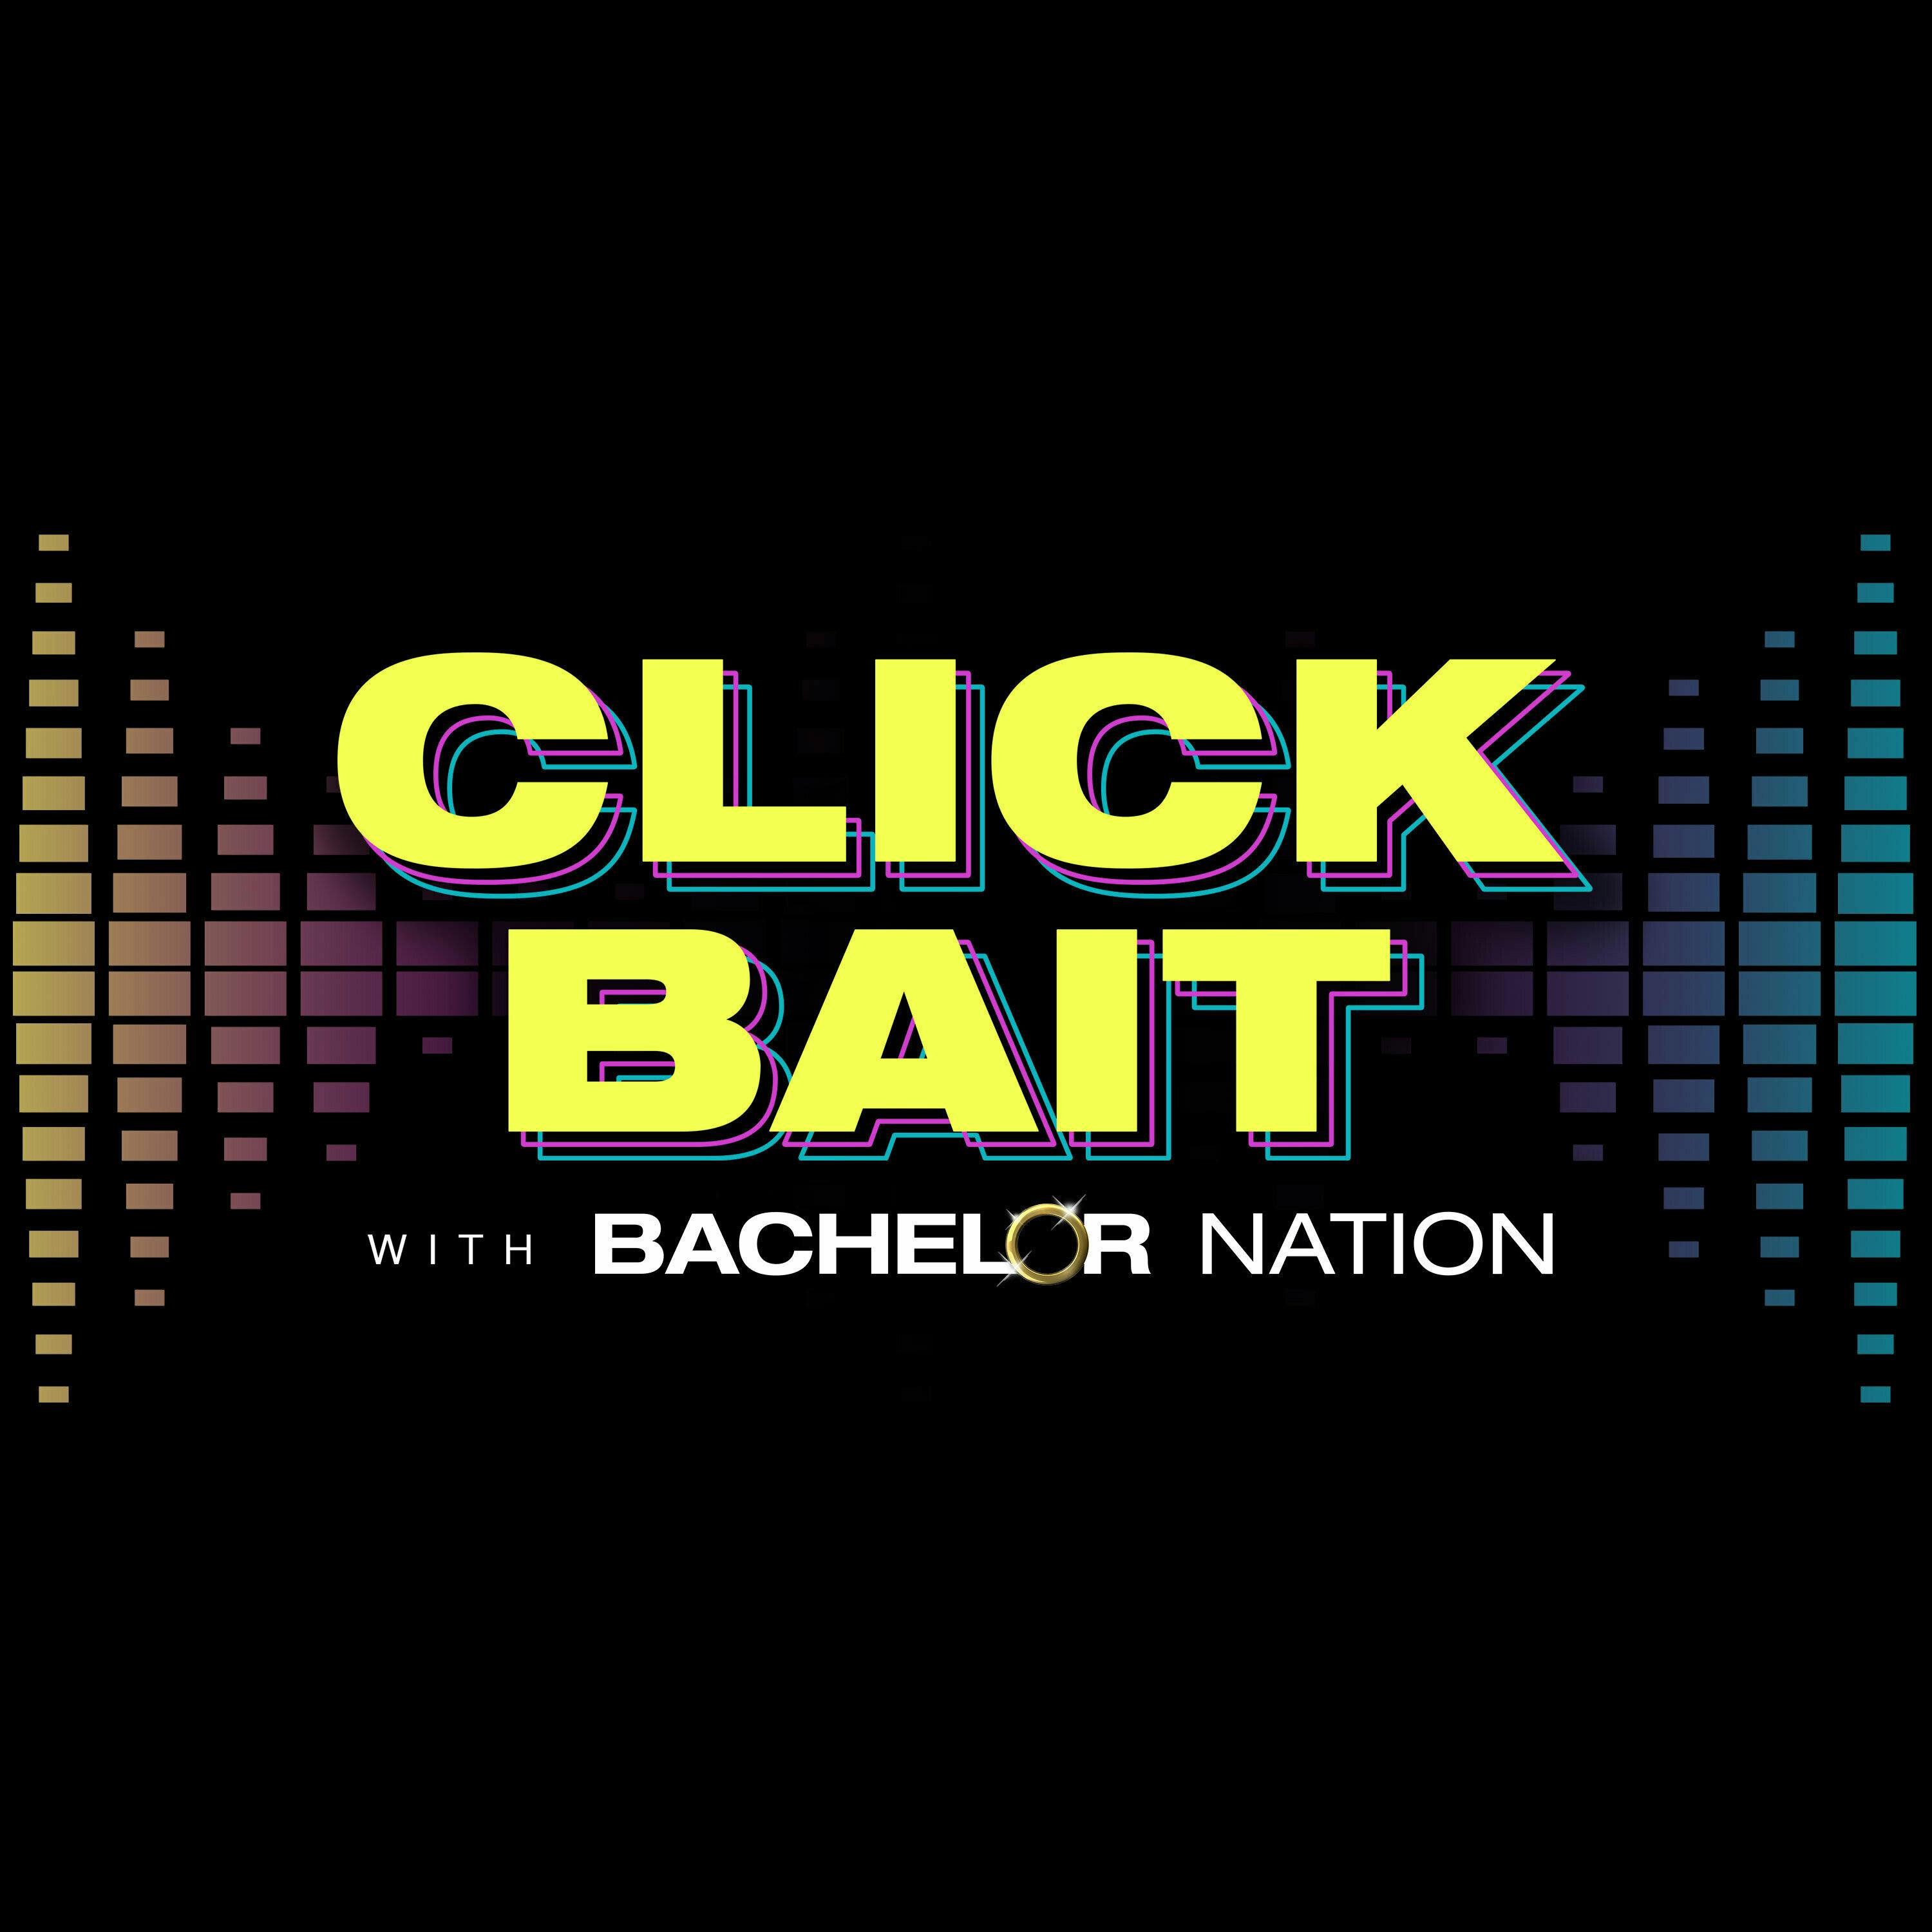 It’s the ‘Click Bait’ Podcast Premiere!